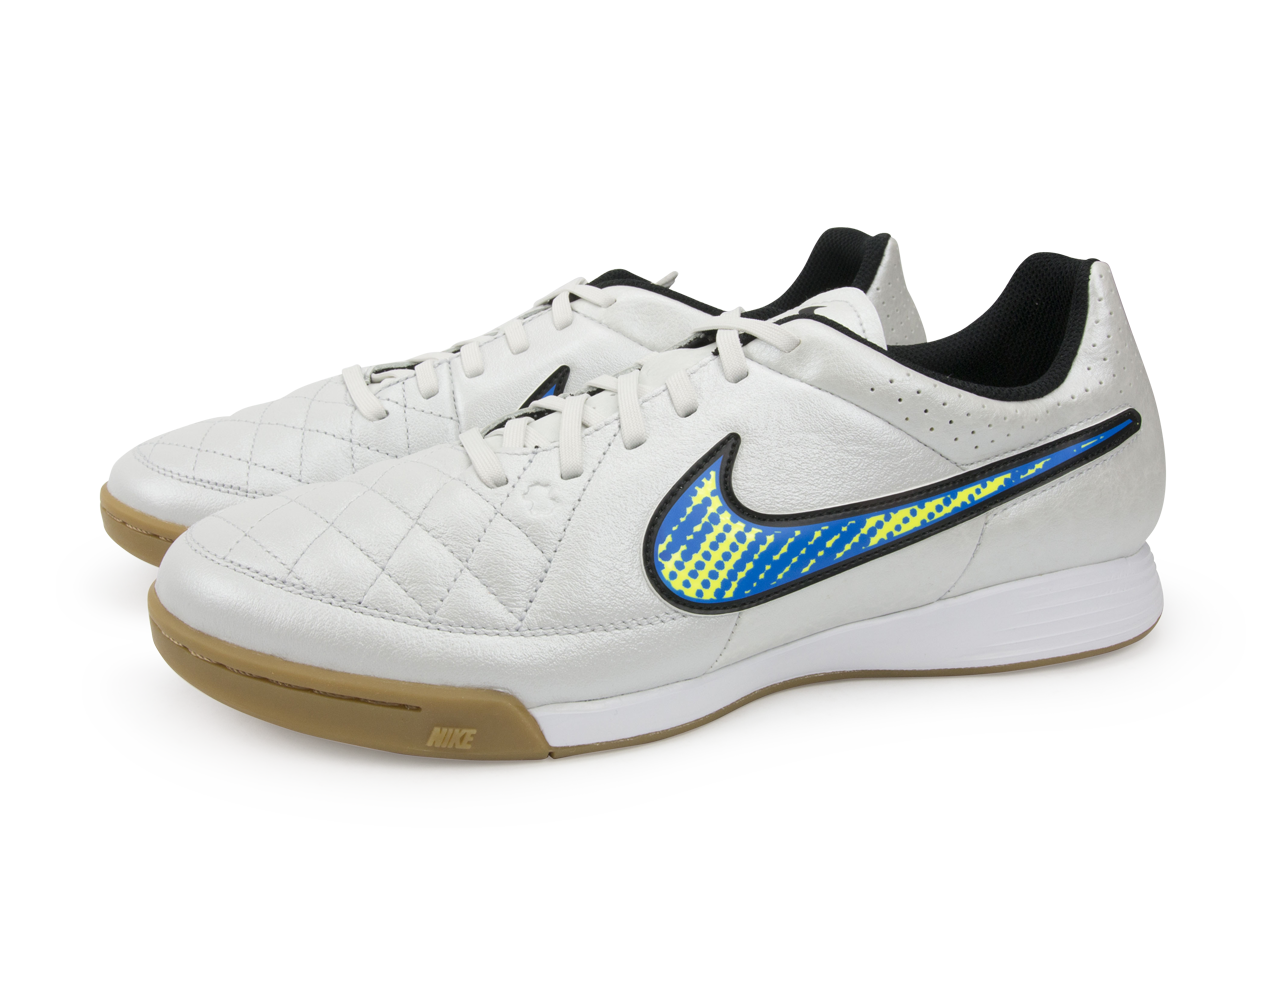 Nike Men's Tiempo Genio Leather Indoor Soccer Shoes White/Volt/Soar/Black